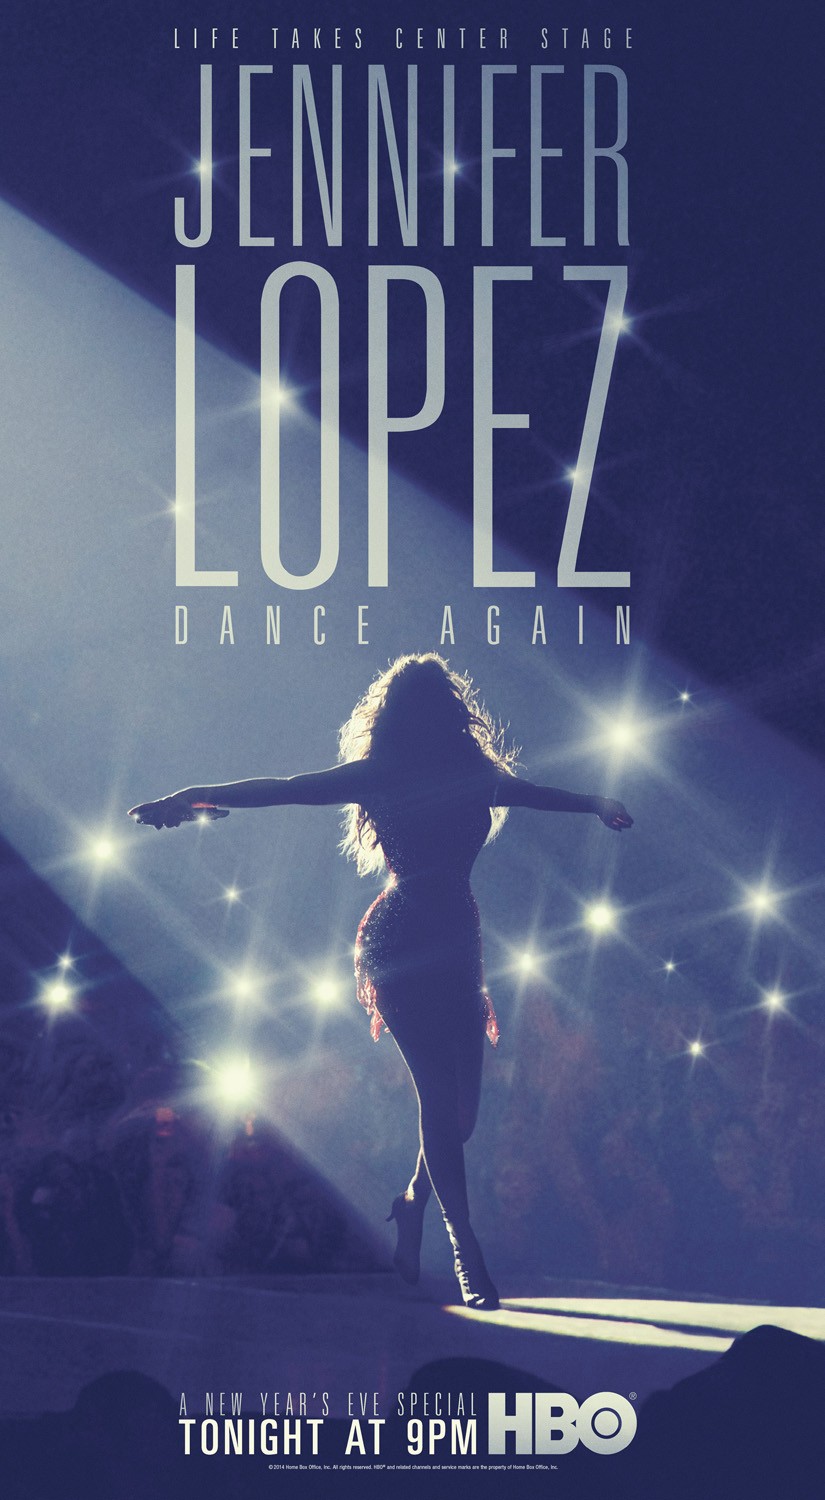 Extra Large TV Poster Image for Jennifer Lopez: Dance Again 